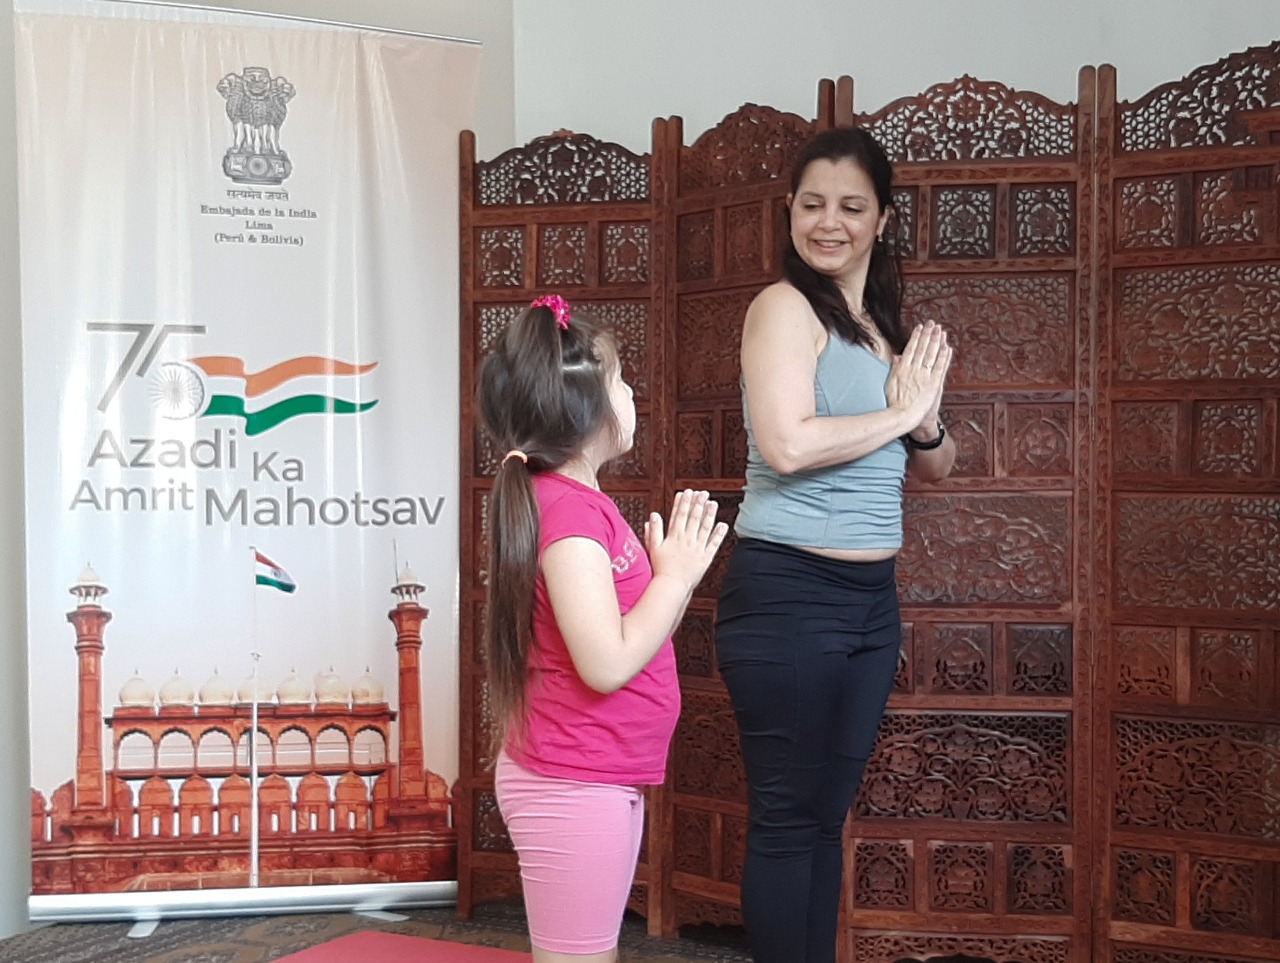 Webinar foregrounding benefits of practicing Yoga organised by Embassy of India, Lima as part of Amrit Mahotsav celebrations